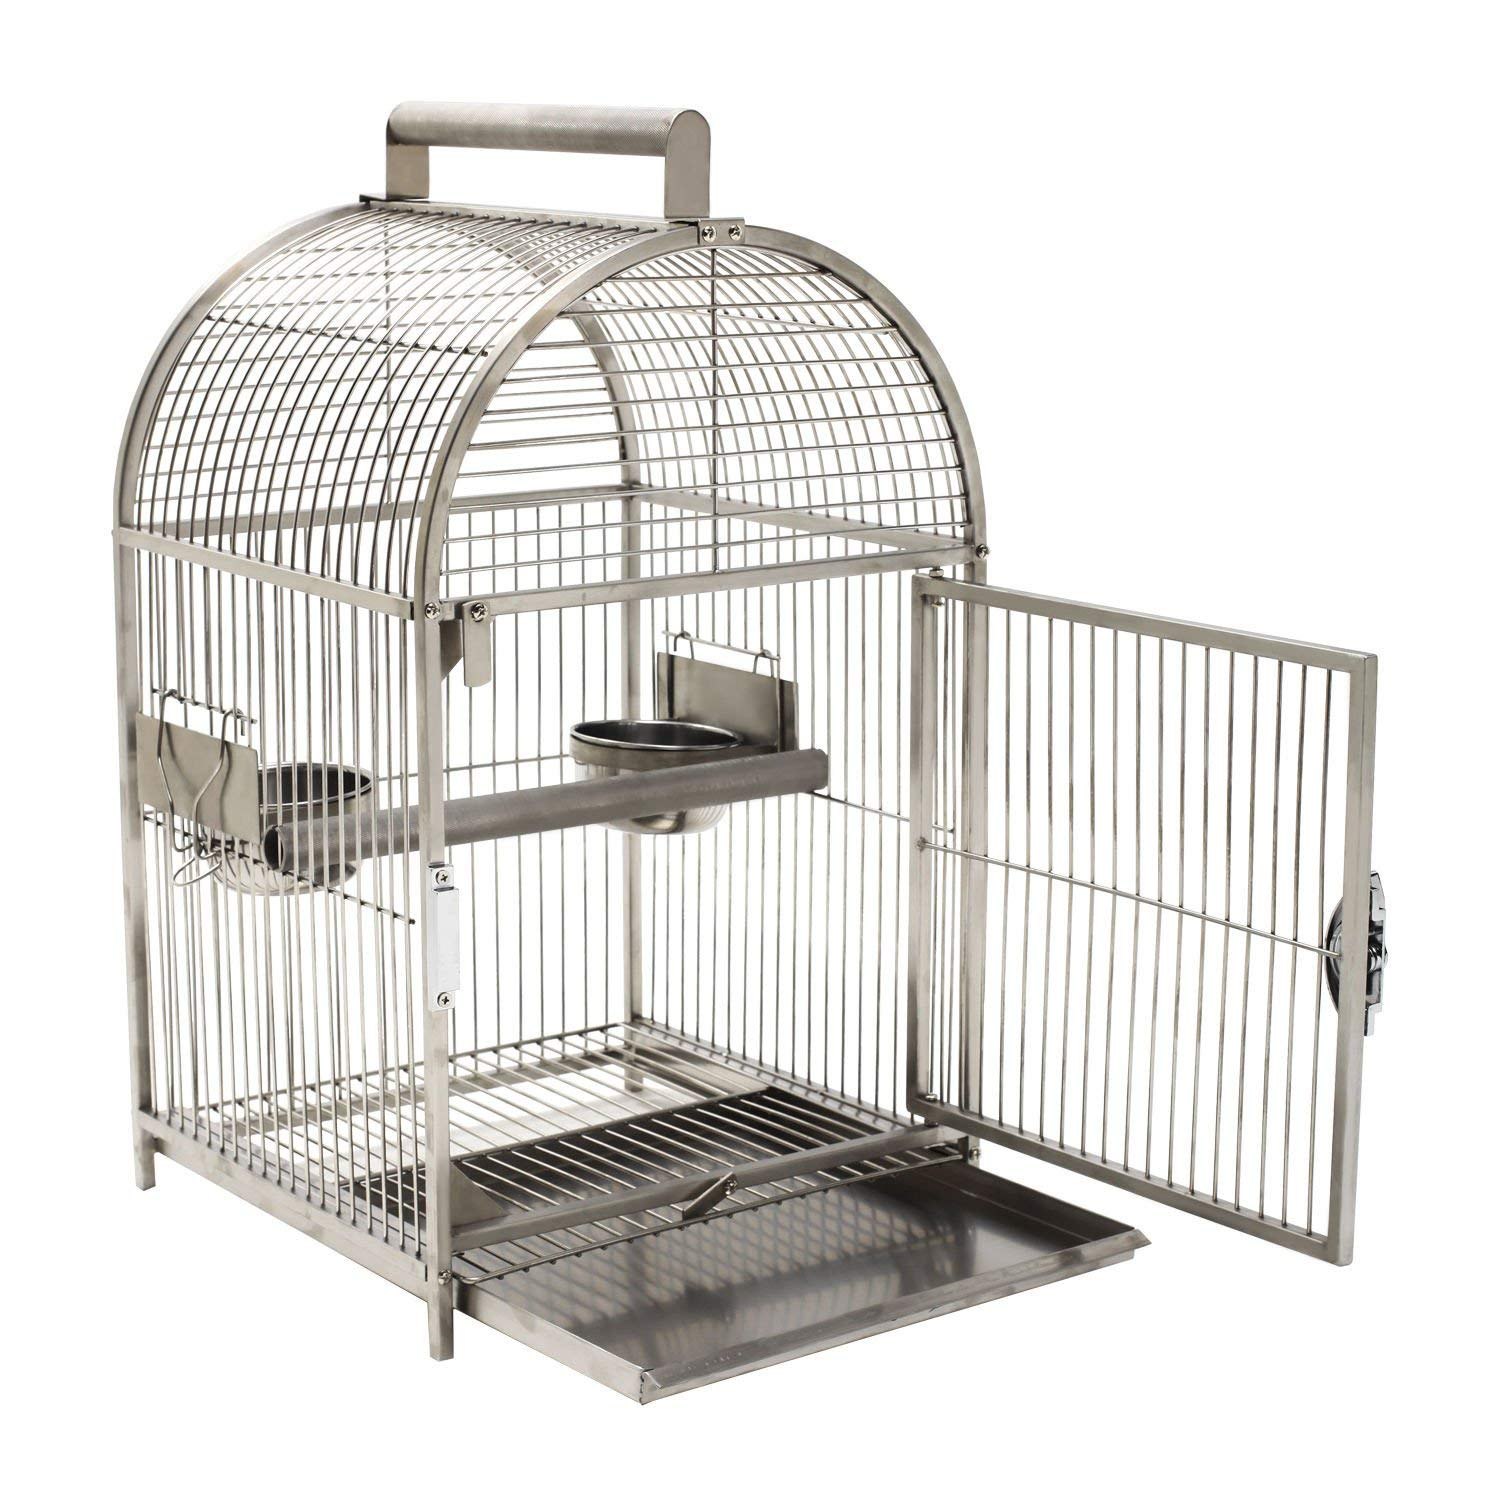 Клетка без птицы. Клетка для птиц Kings Cages ATS 1719 Aluminum small Travel Carriers Cage Parrot Bird Toy Toys. Клетка для птиц 27,5*19,5*25 см Пд / 89220. Клетка для крупного попугая.